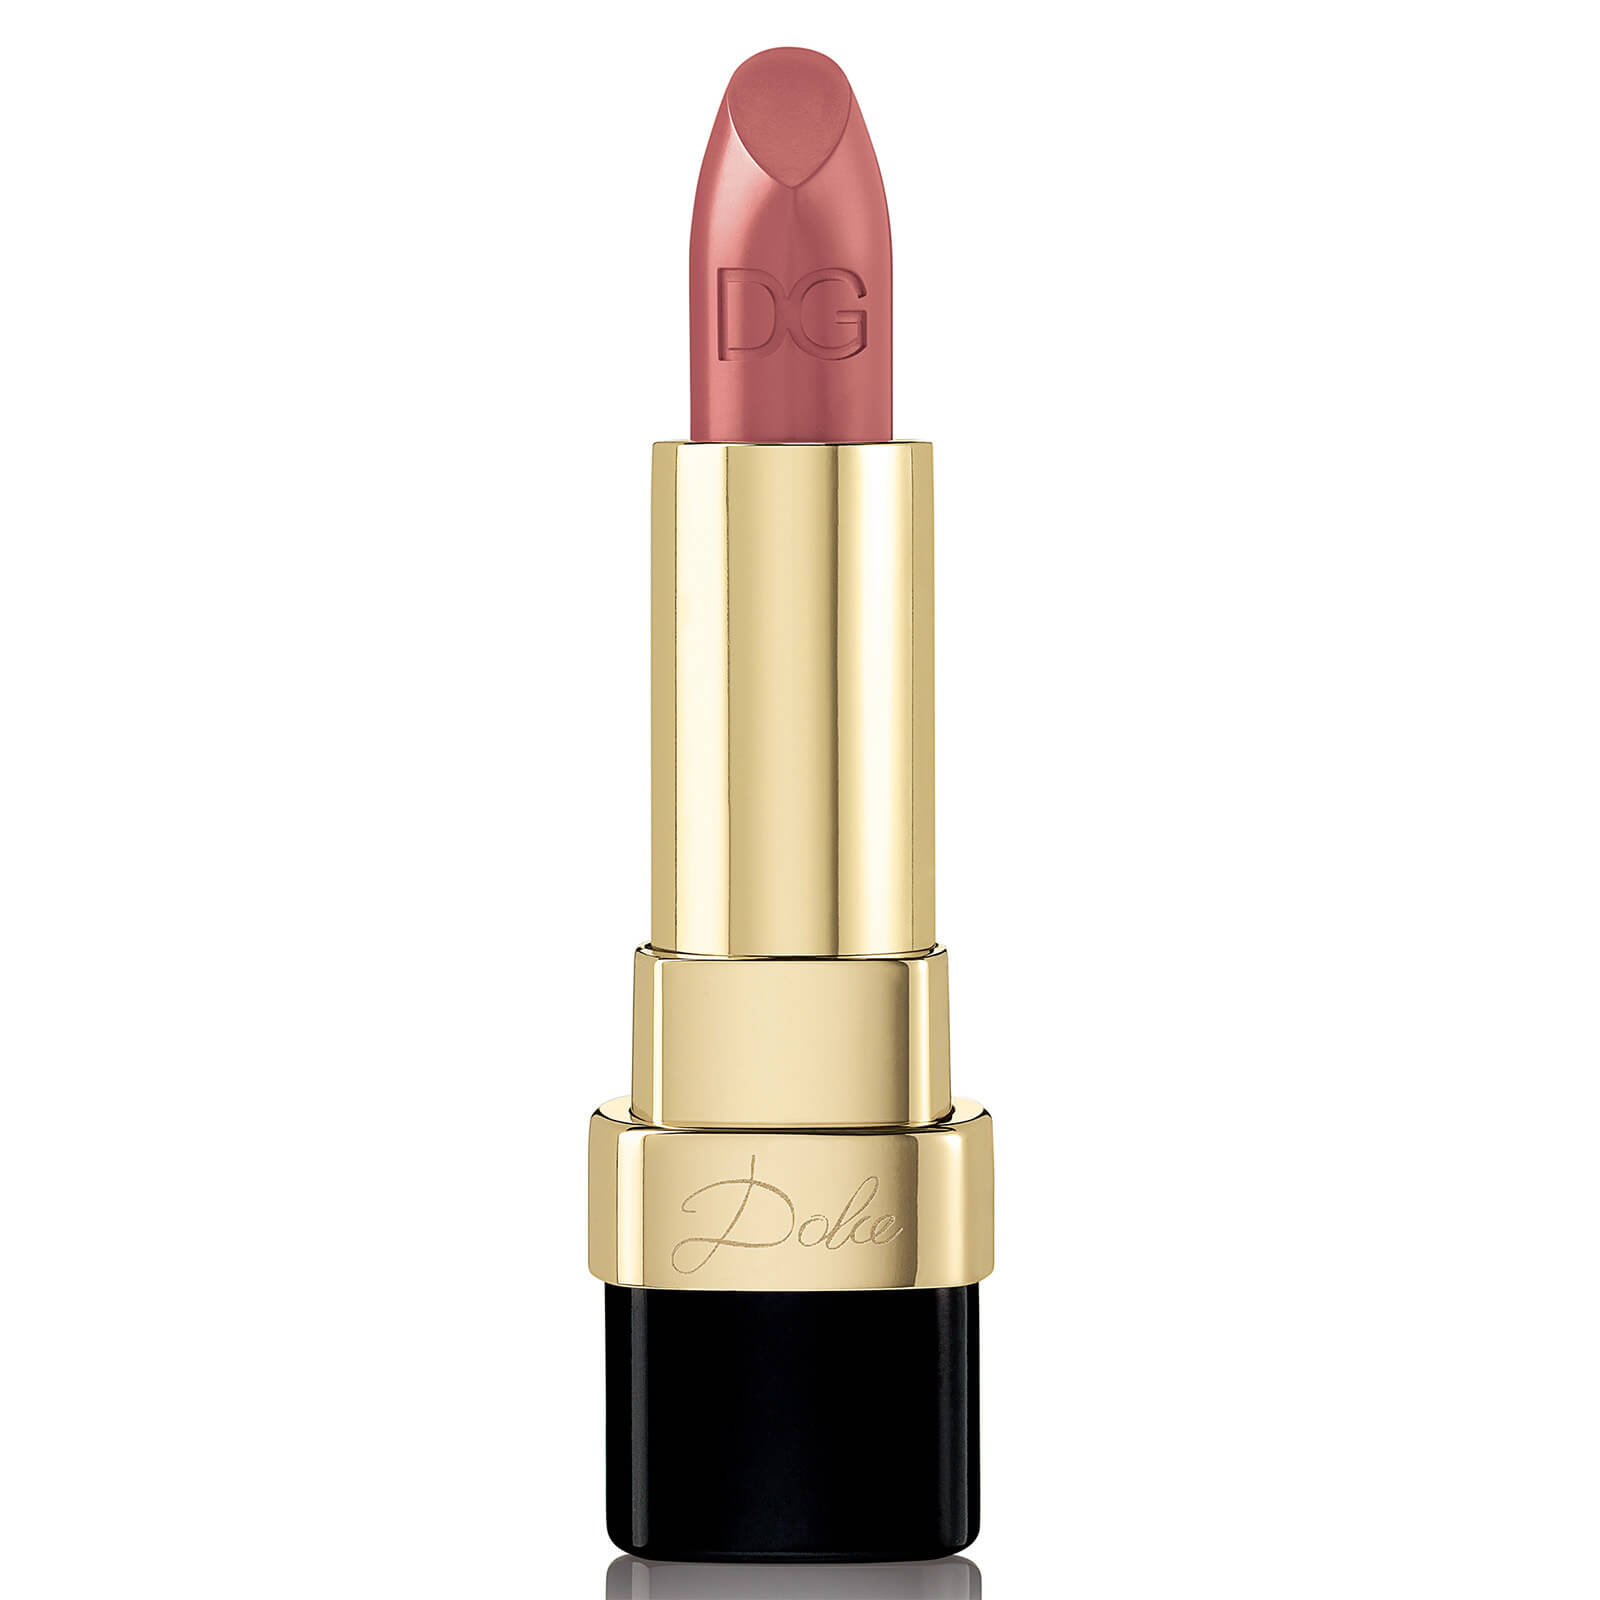 Dolce&Gabbana Dolce Matte Lipstick 3.5g (Various Shades) - 142 Dolce Gentle